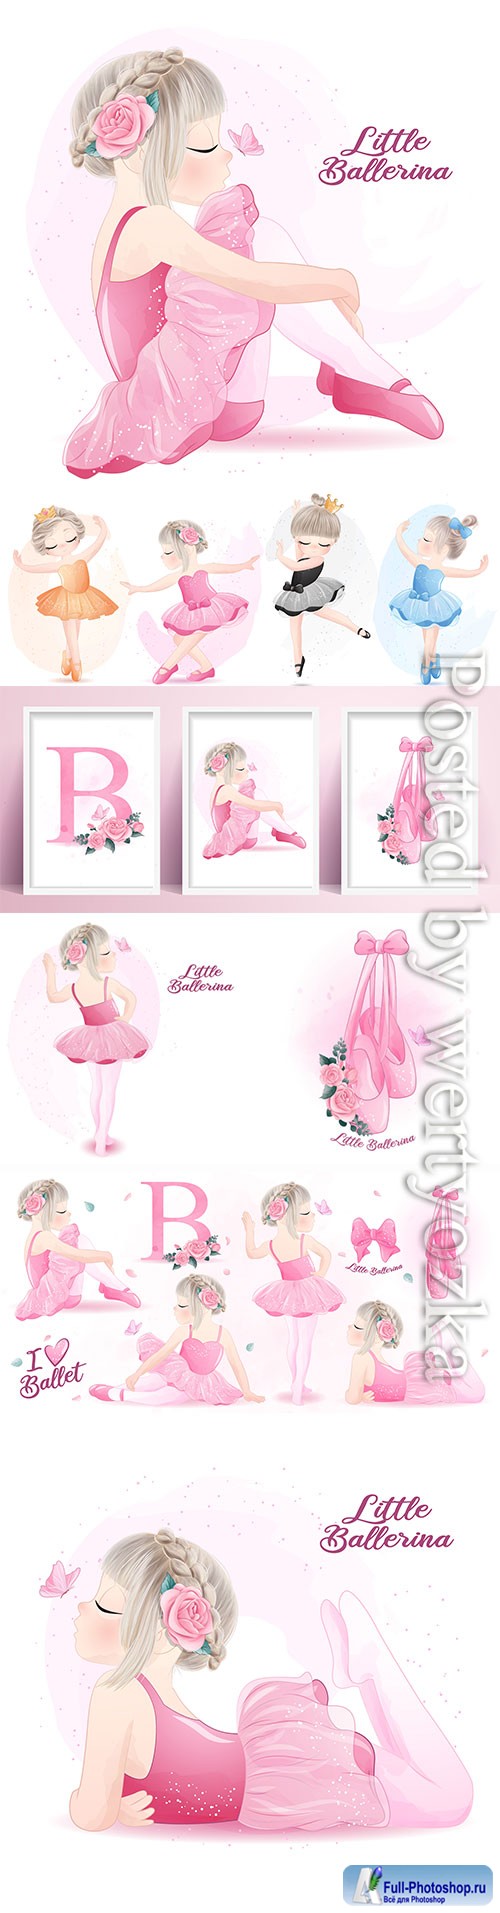 Cute girl ballerina watercolor illustration vector set